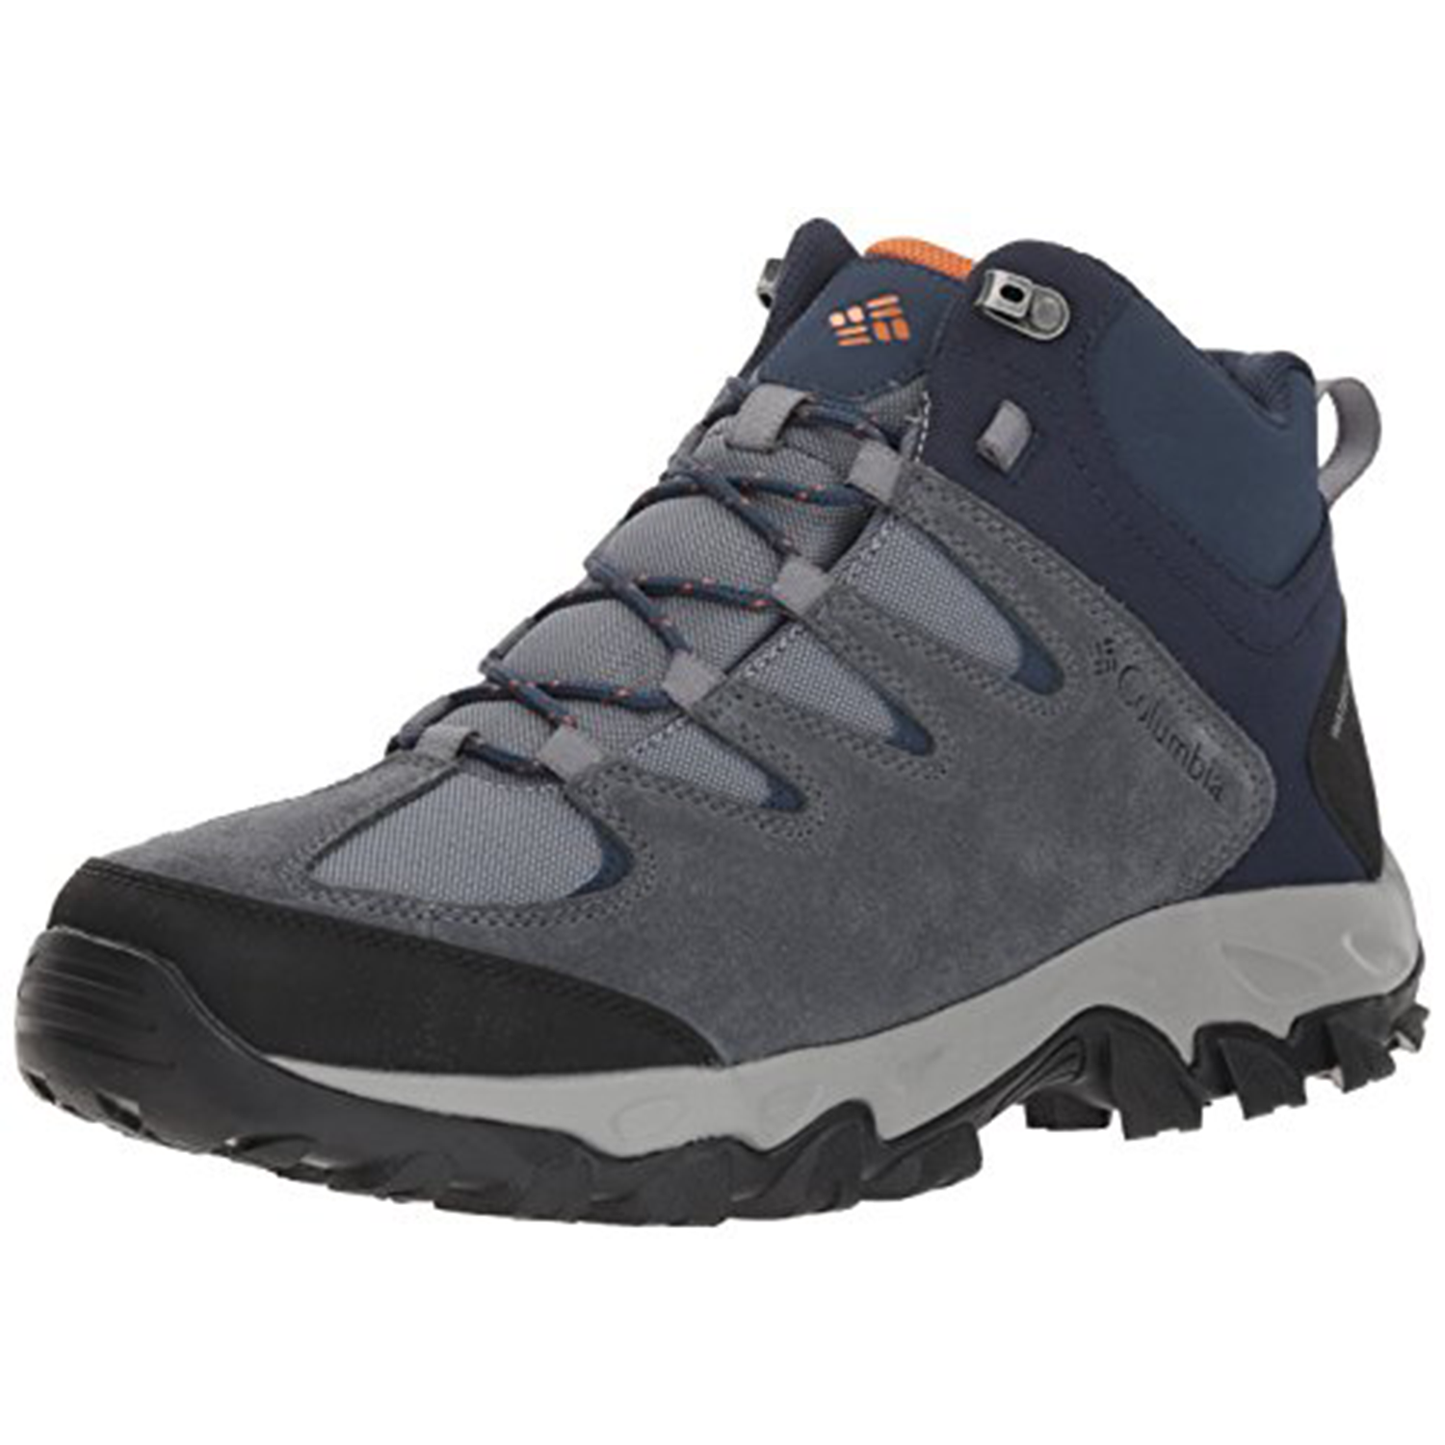 Columbia Buxton Peak Mid Waterproof Hiking Boot Size 14 - Men 1790971-021 Grey